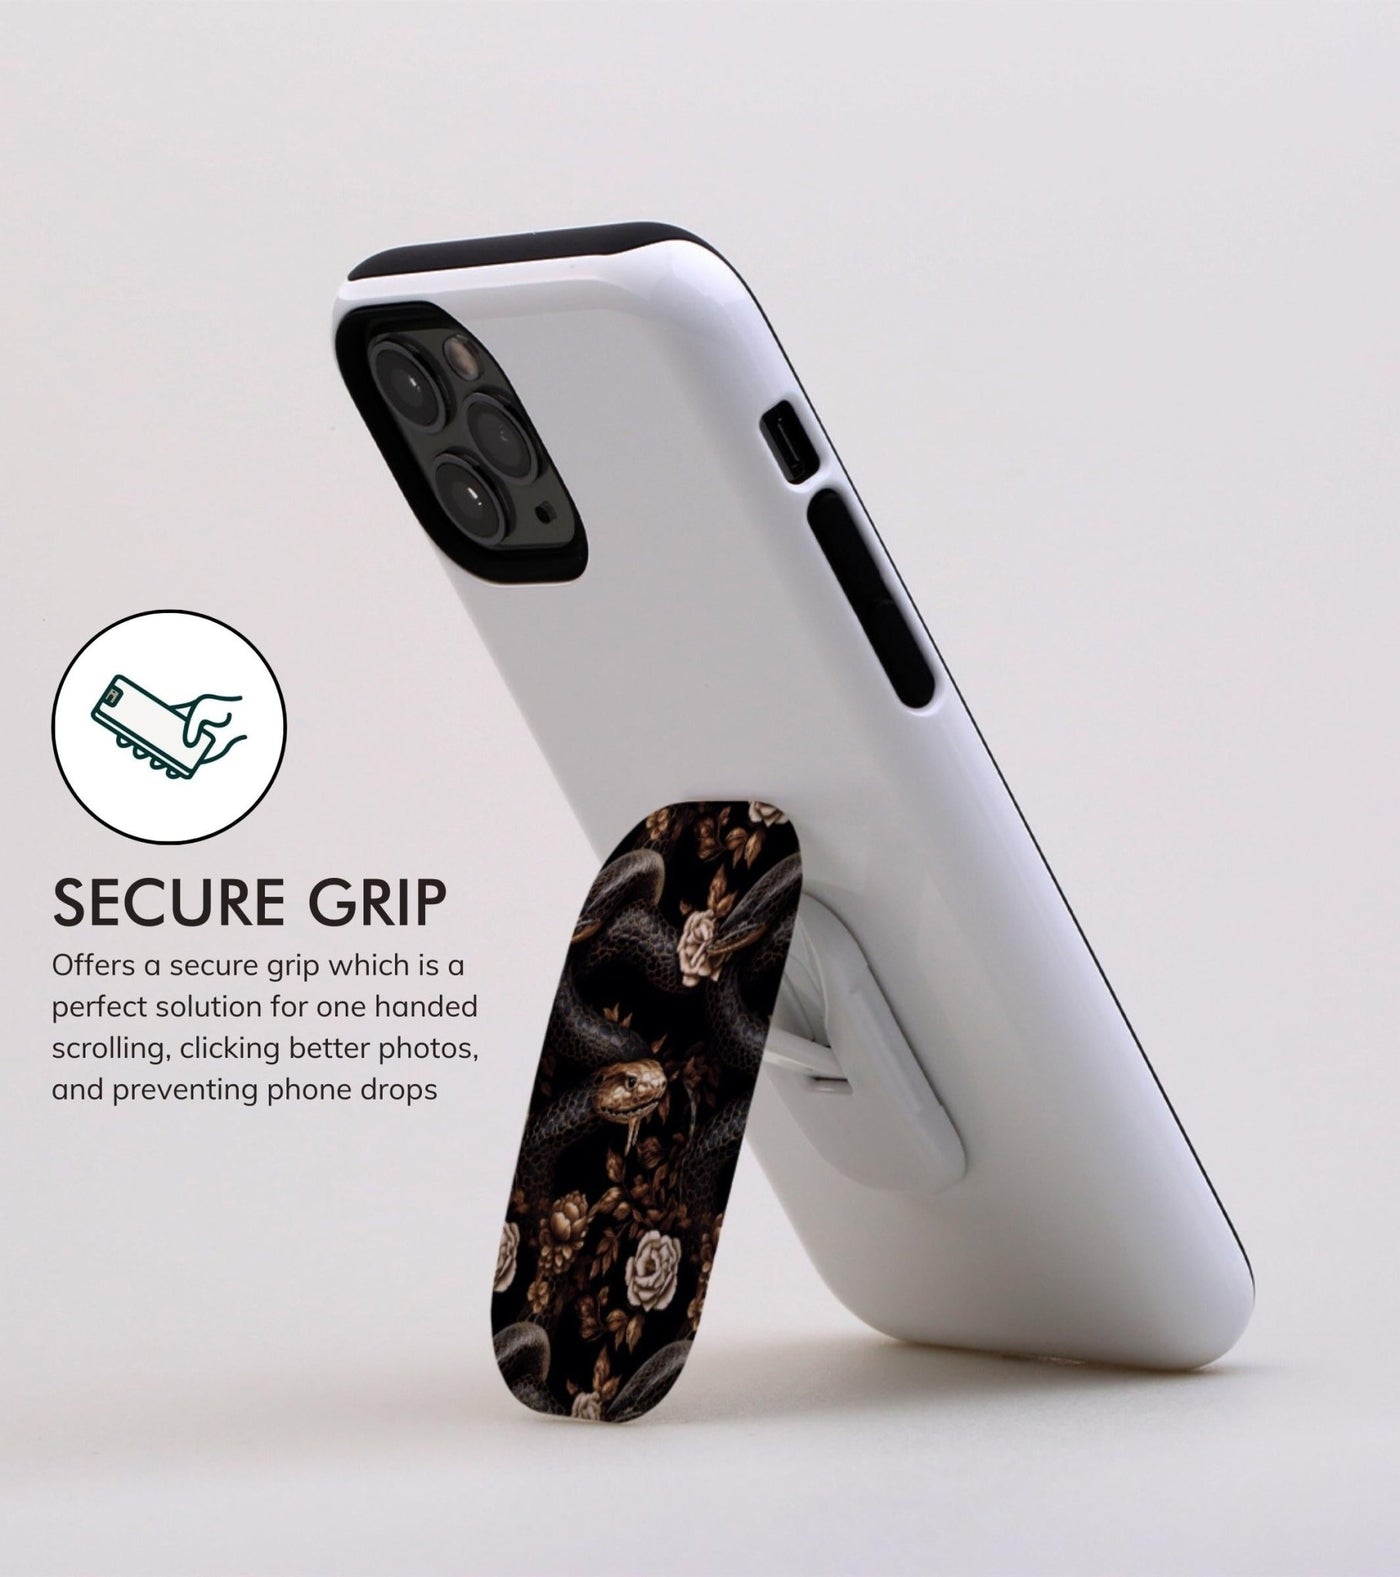 The Viper Phone Grip